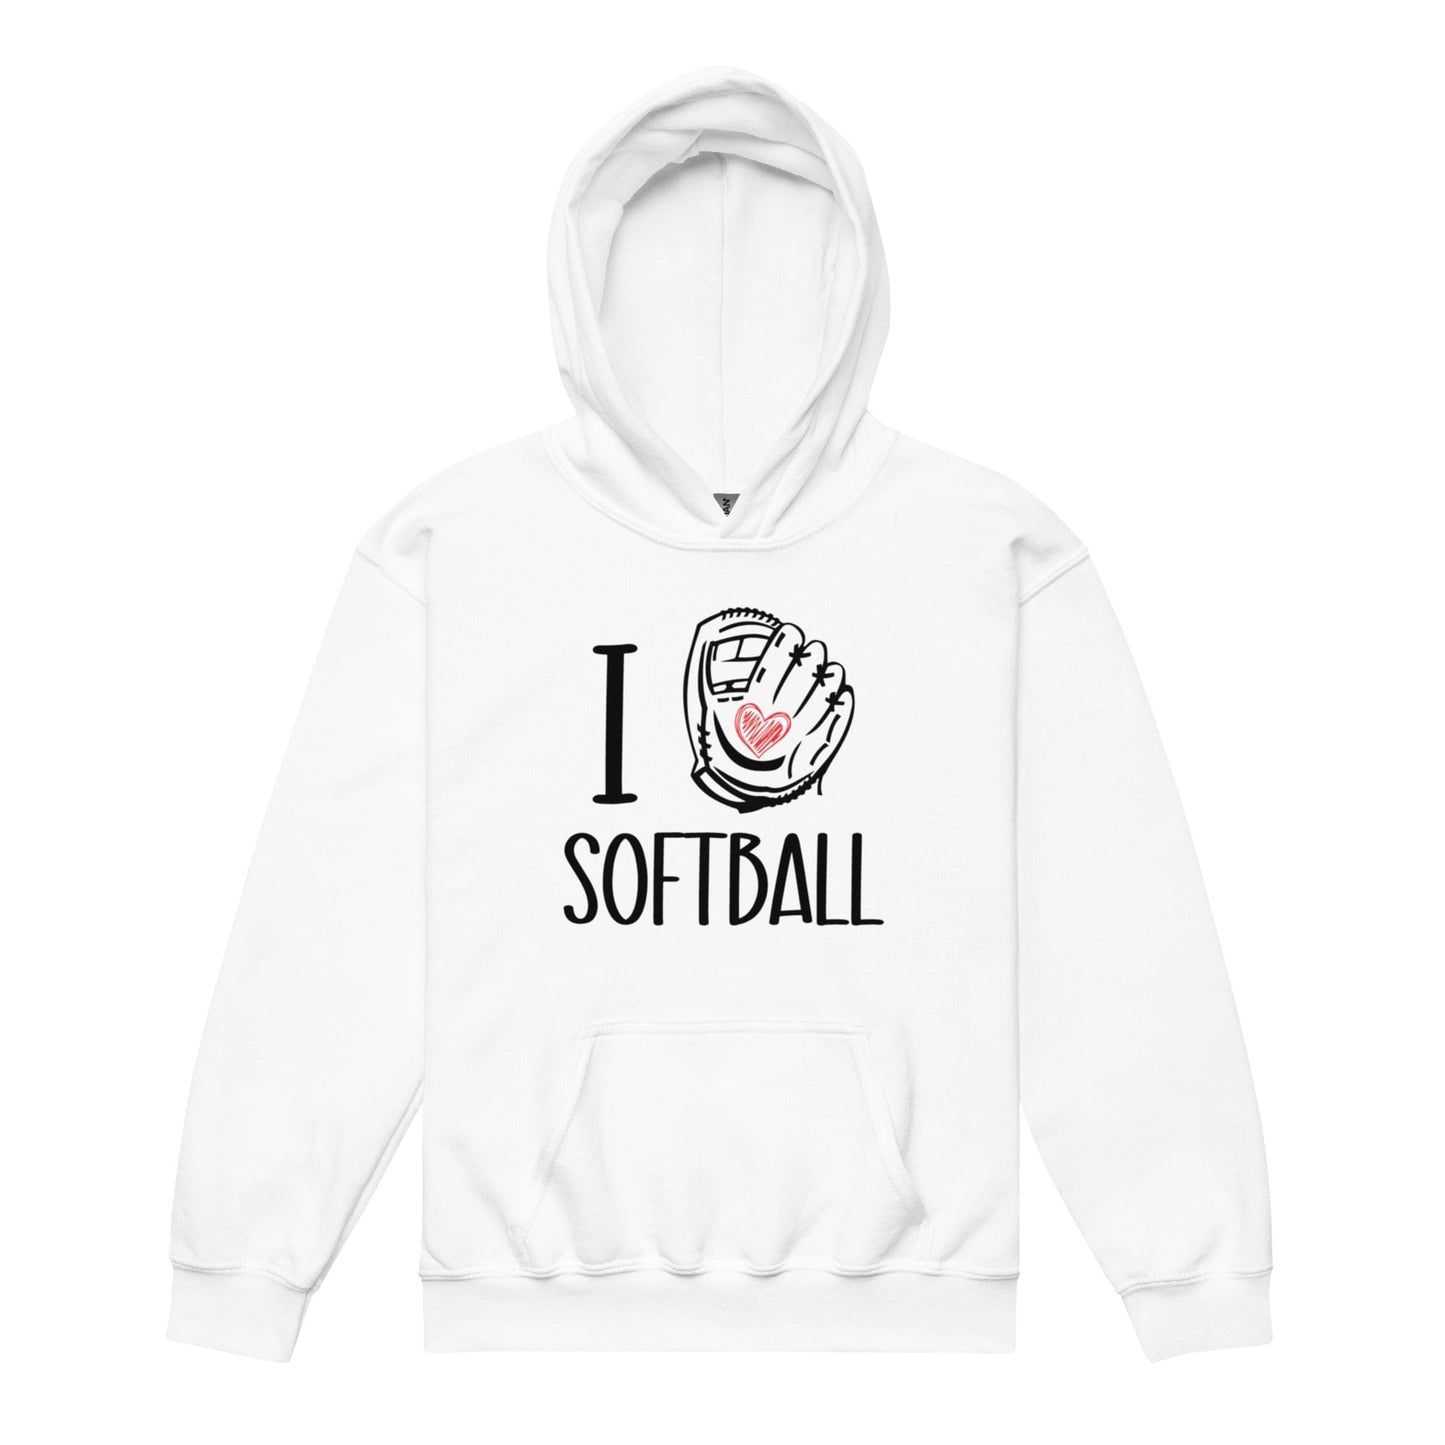 I Glove Softball - Youth Hoodie